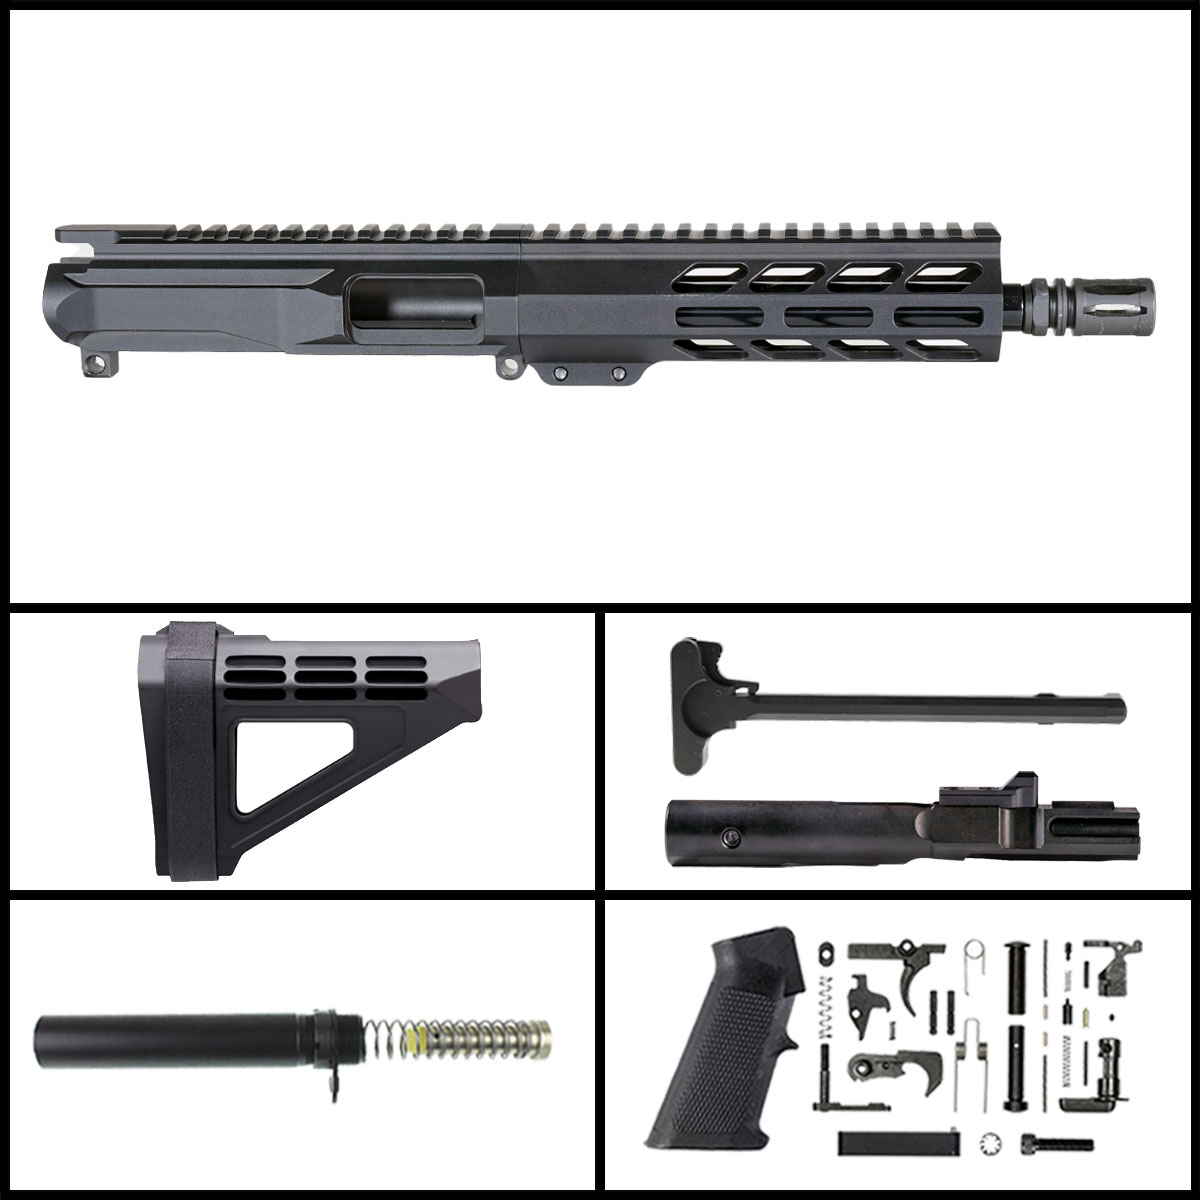 MMC 'Eternal Night Gen 2' 8.5-inch AR-15 9mm Nitride Pistol Full Build Kit